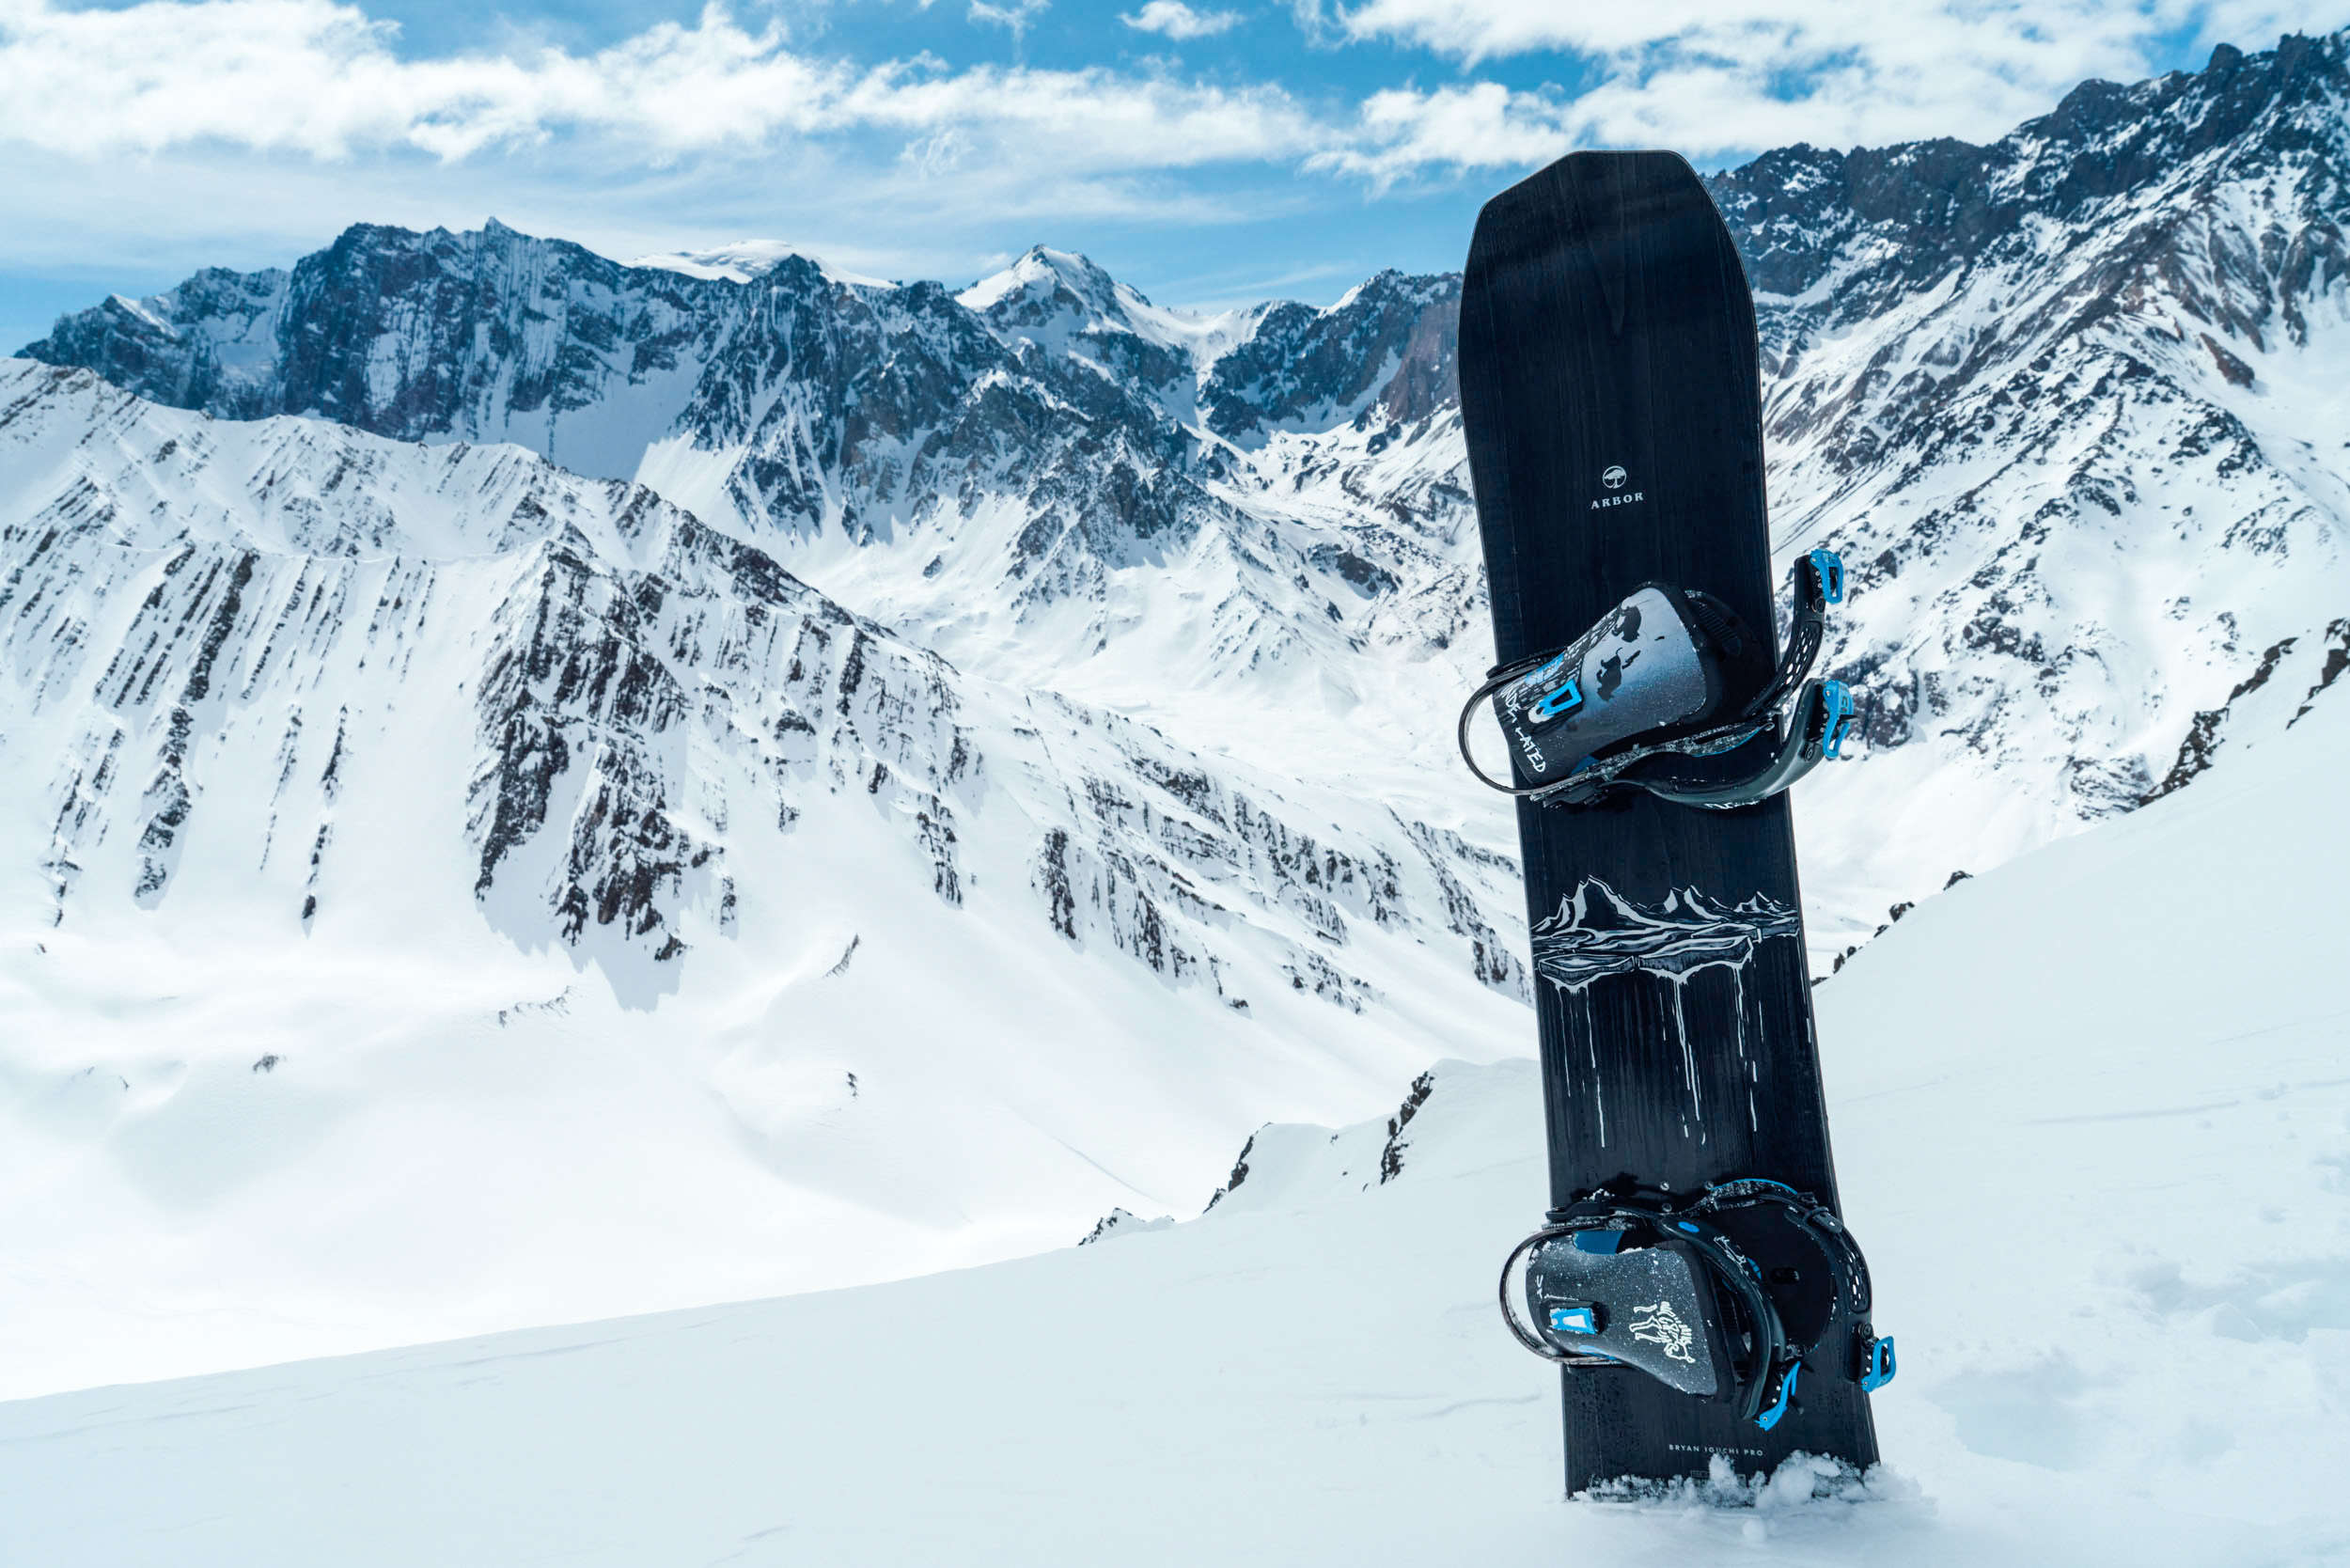 Snowboard - Sport Systems Albuquerque, NM | 505-837-9400